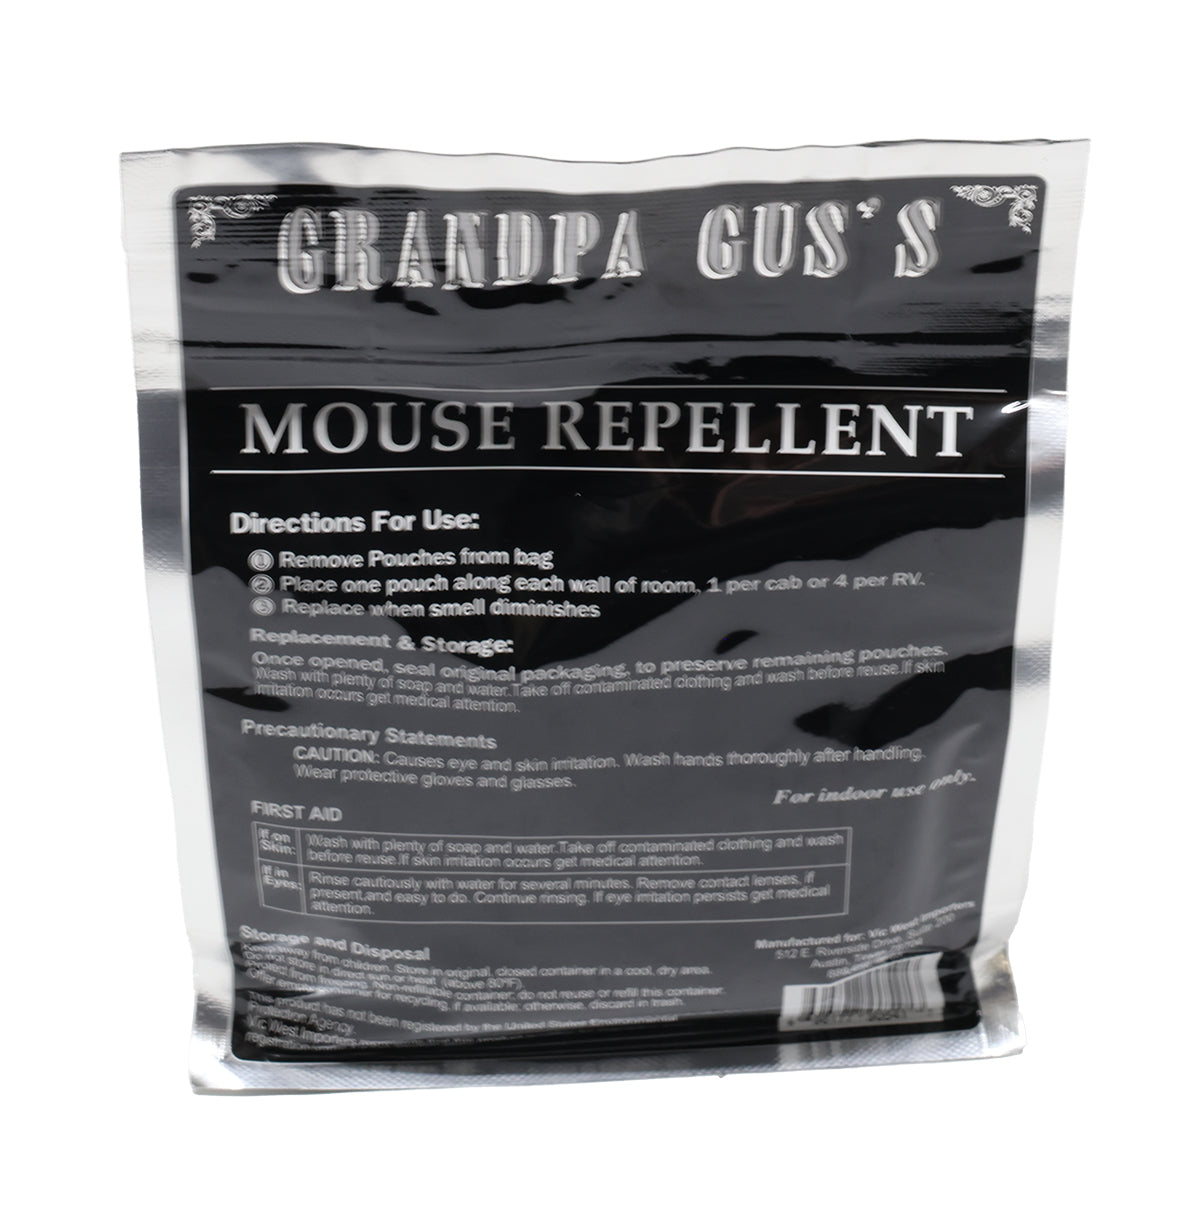 Grandpa Gus's Rodent Repellent Pouches - A-B1GPP106